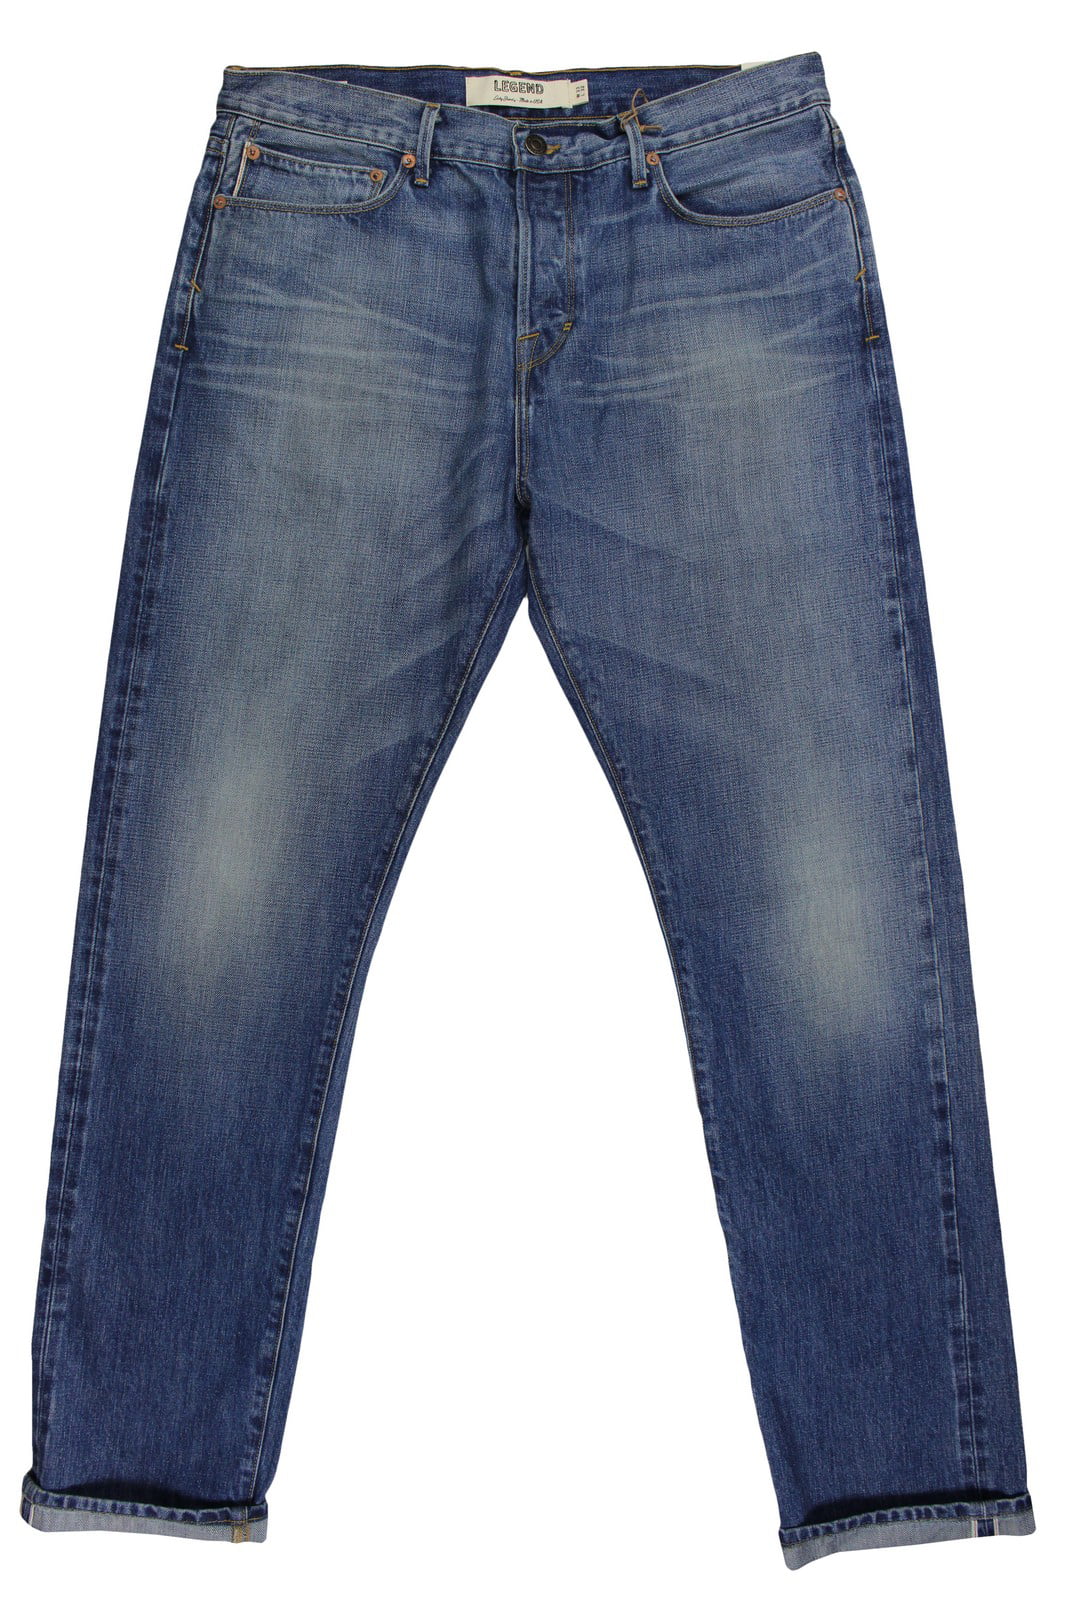 Lucky Brand Men's Medium Blue Authentic Skinny Legend Jeans - Walmart.com